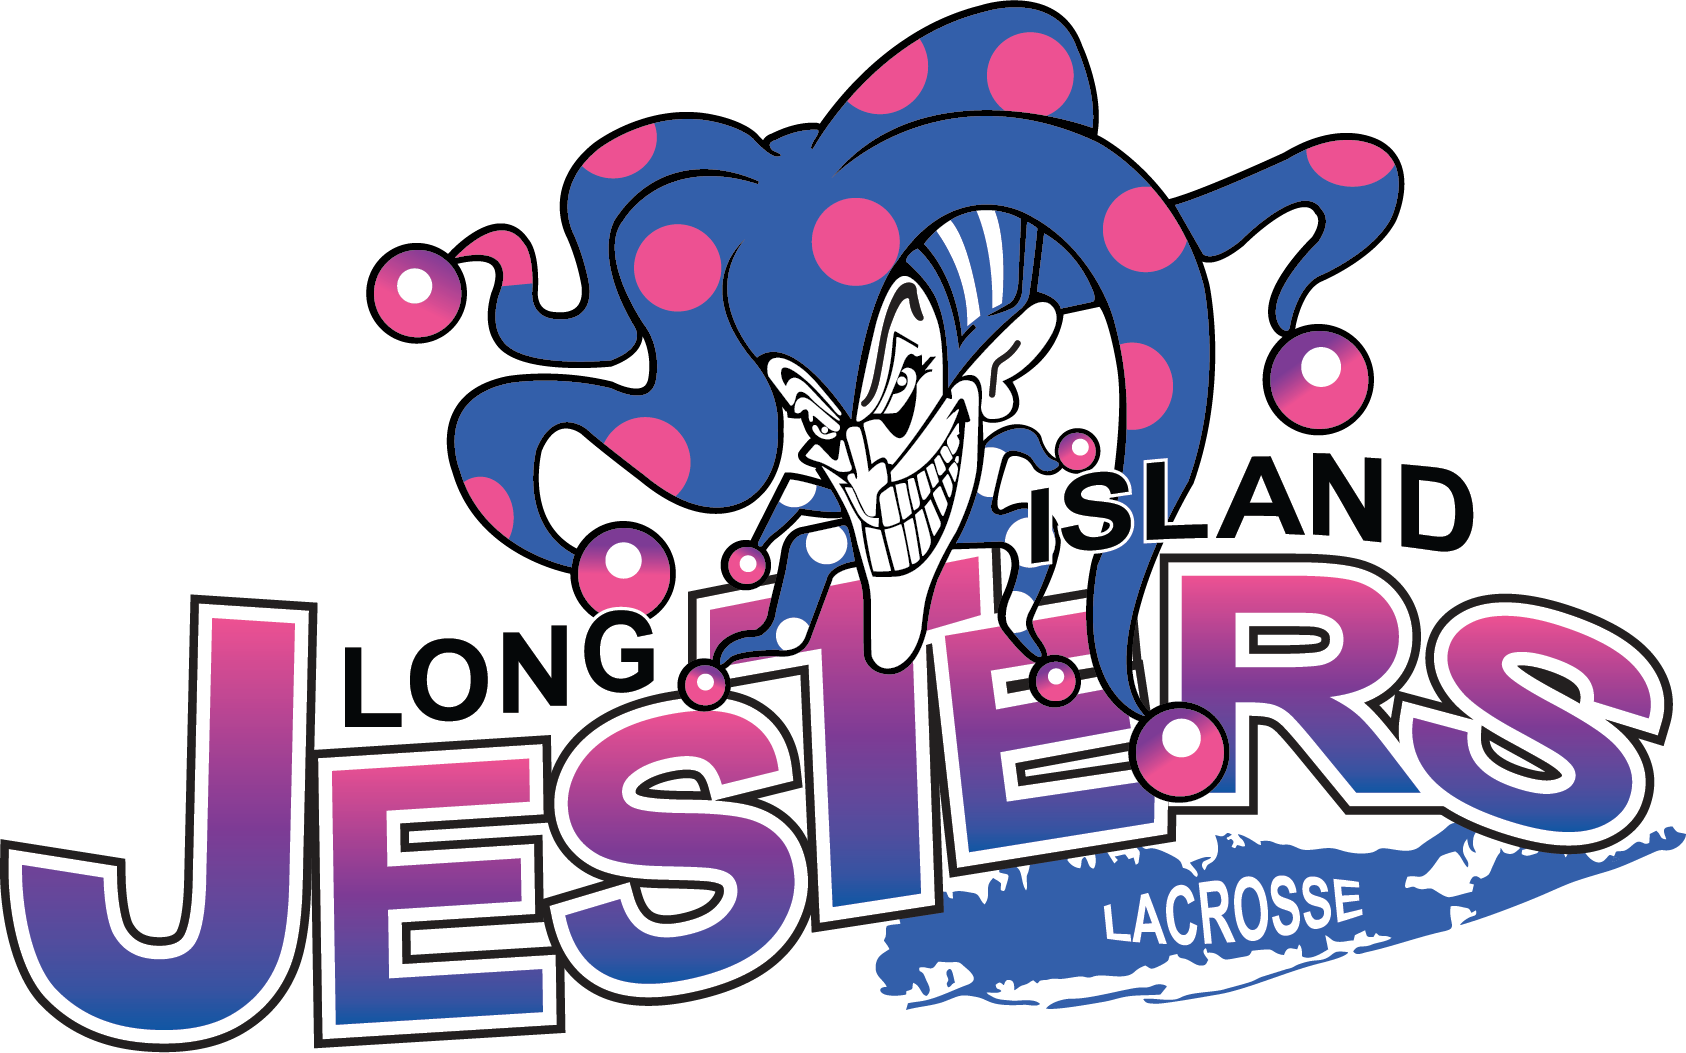 LI Jesters Blue Island Logo